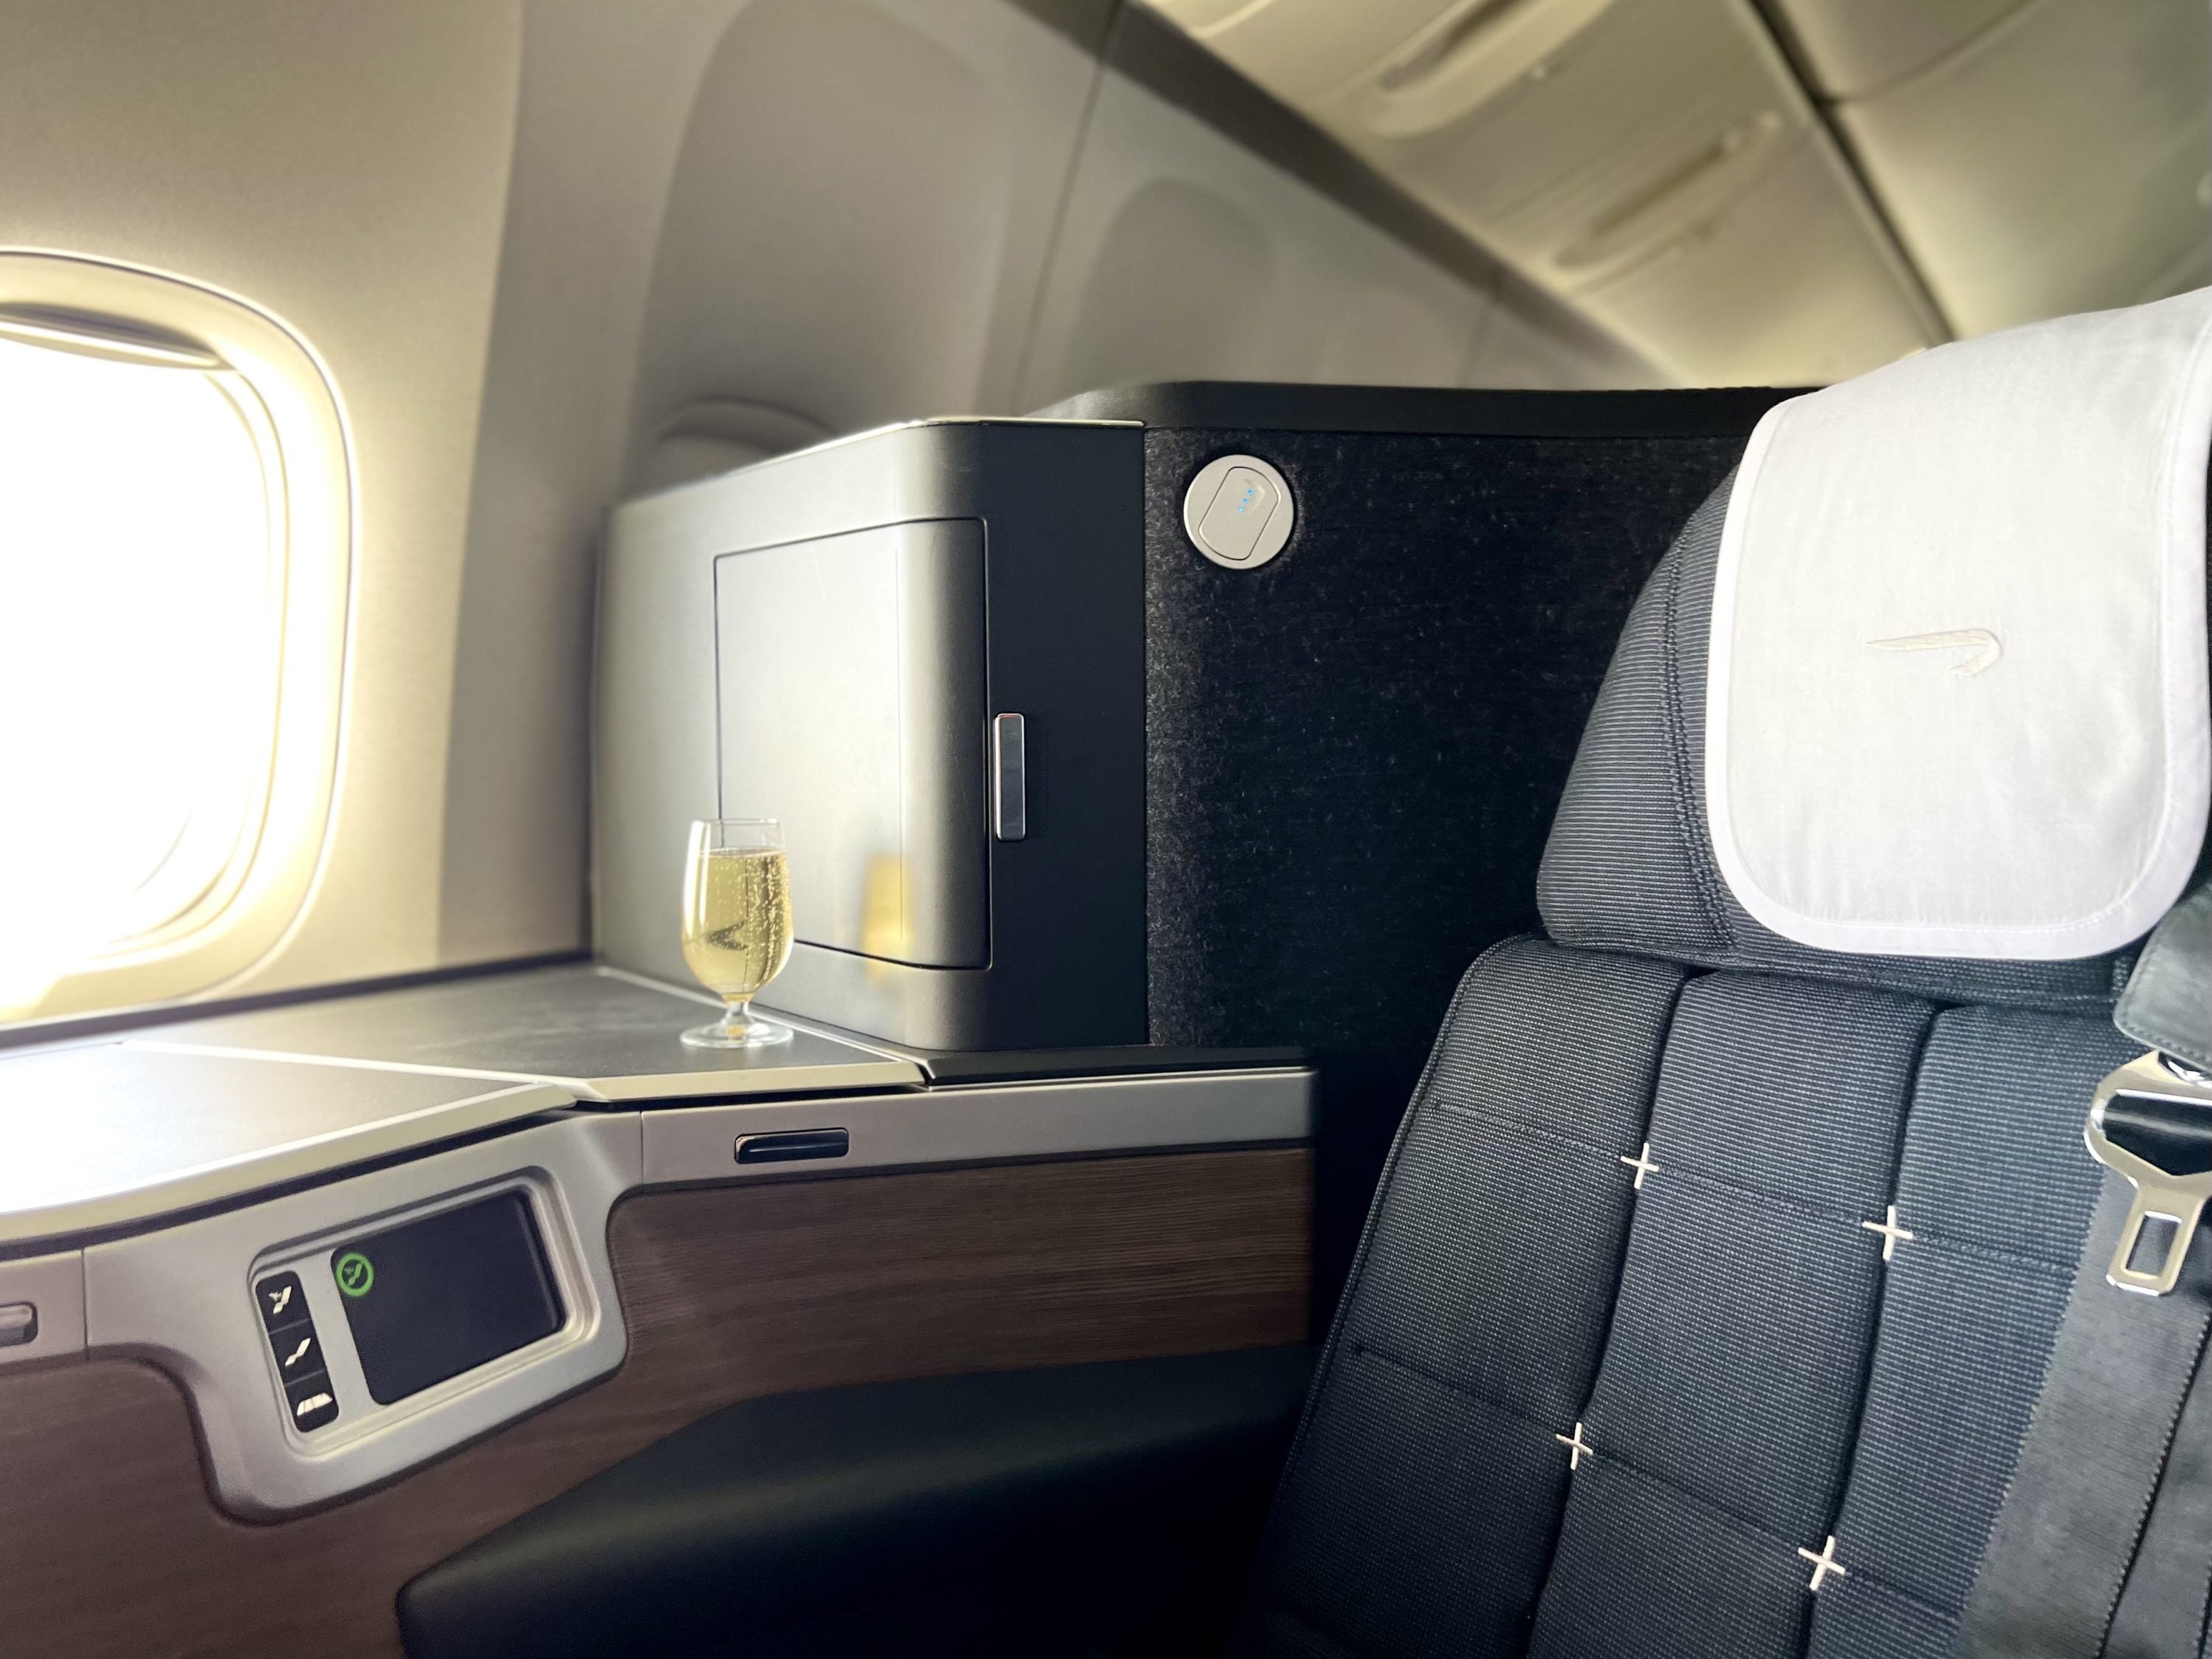 British Airways Boeing 777 300 Club Suite seat with Champagne